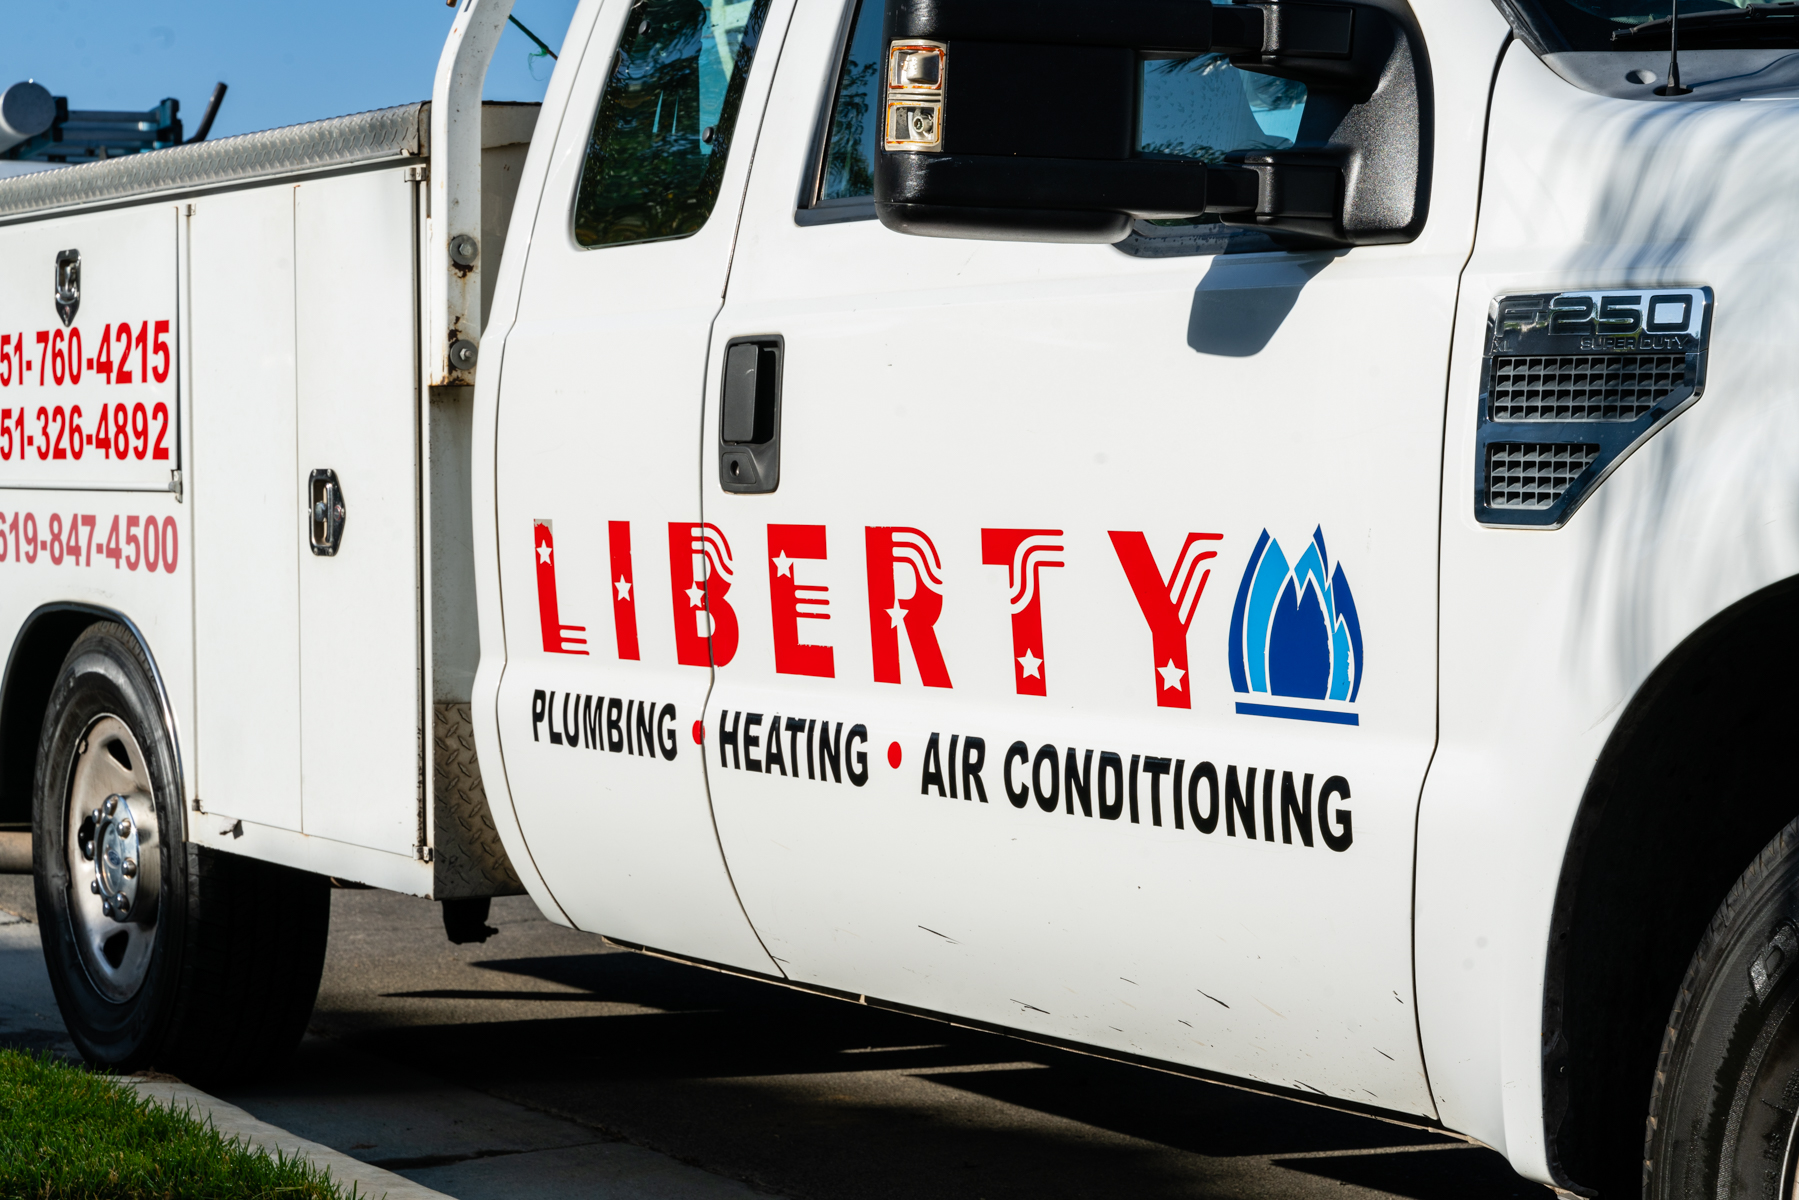 Liberty Plumbing, Heating & Air Conditioning, Inc.